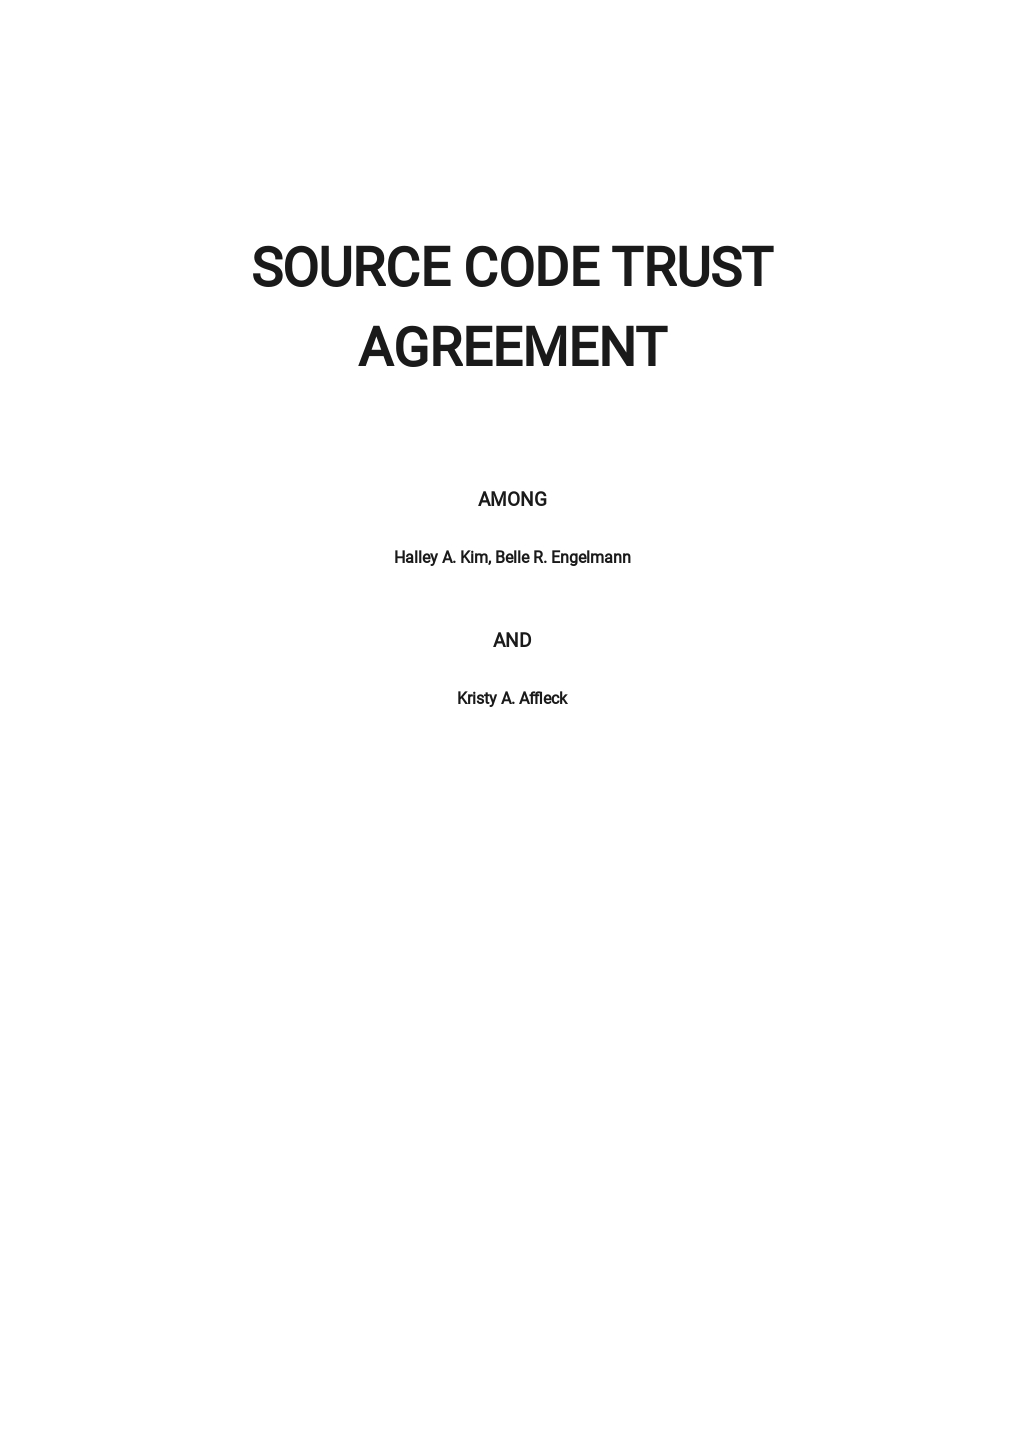 Source Code Trust Agreement Template.jpe